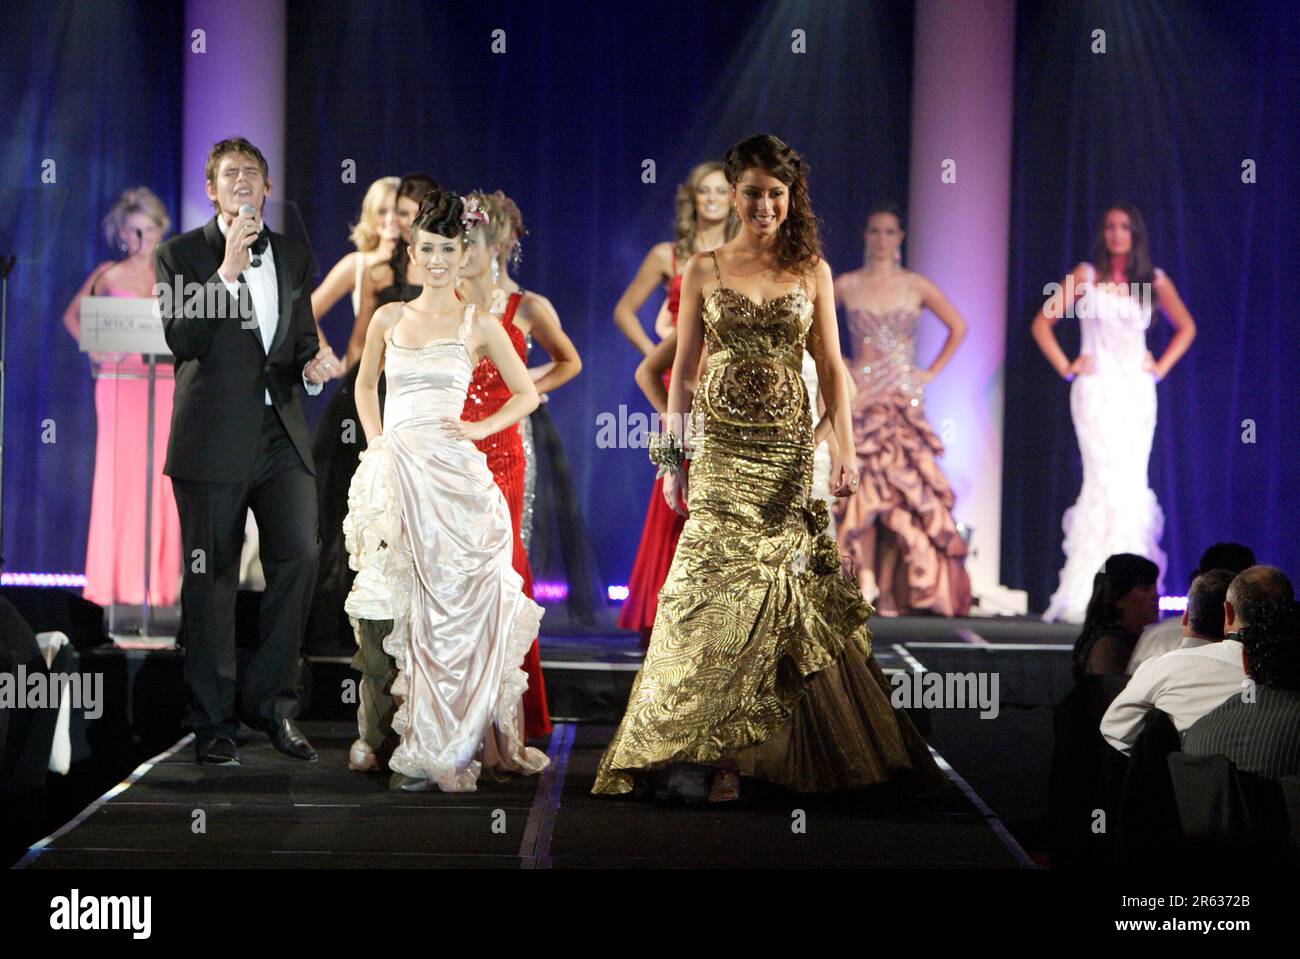 Atmosphere Miss World Australia 2008 crowning gala held at Star City Casino Sydney, Australia. 09.04.08. Stock Photo